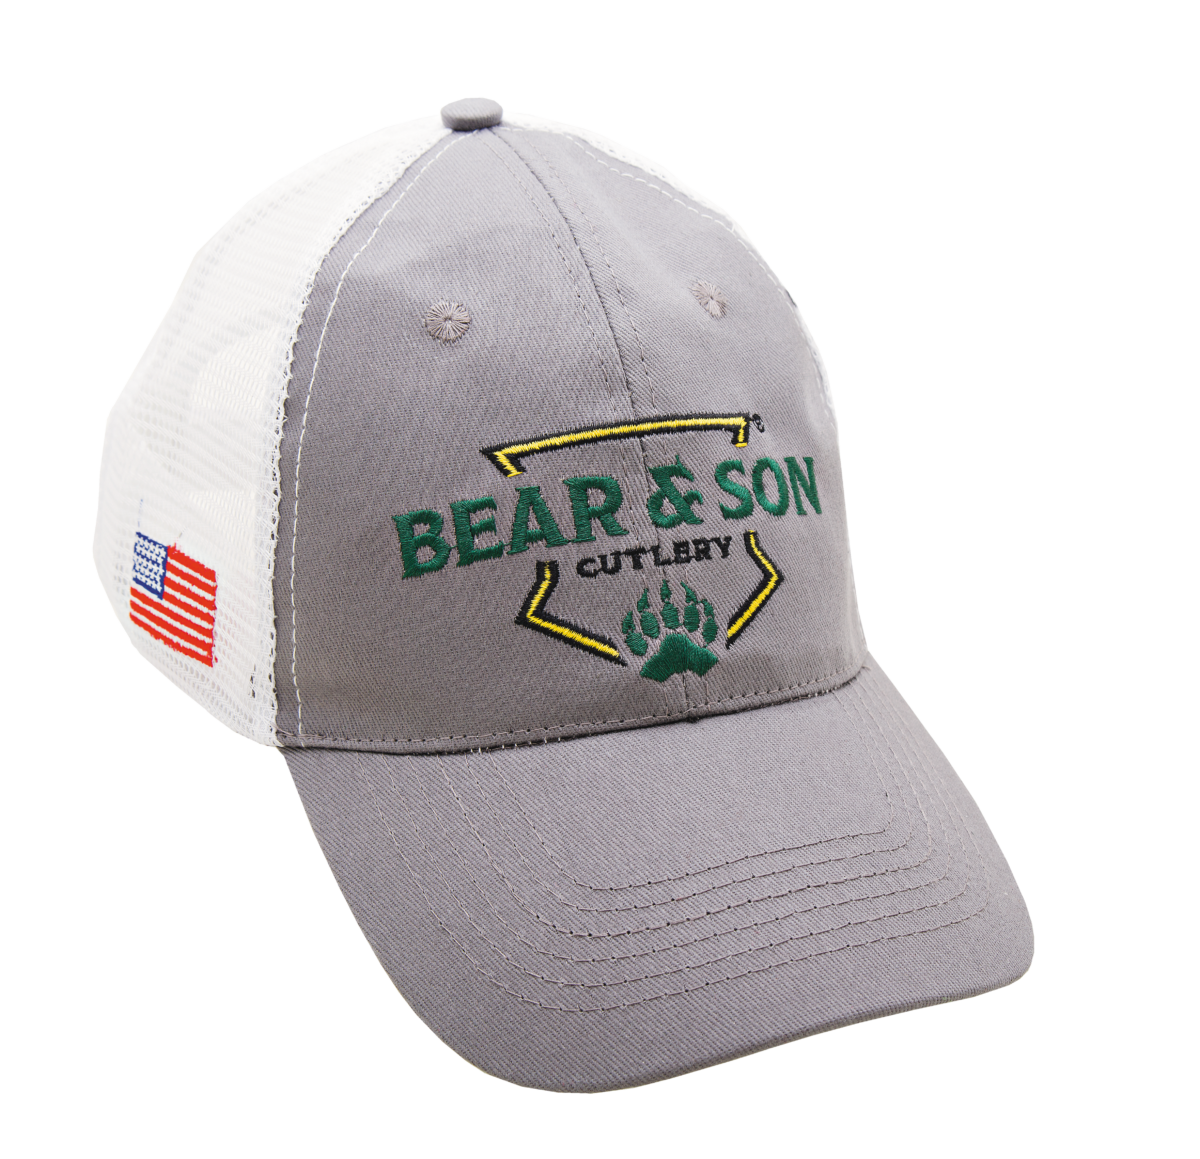 Bear & Son Cutlery Gray White Hat